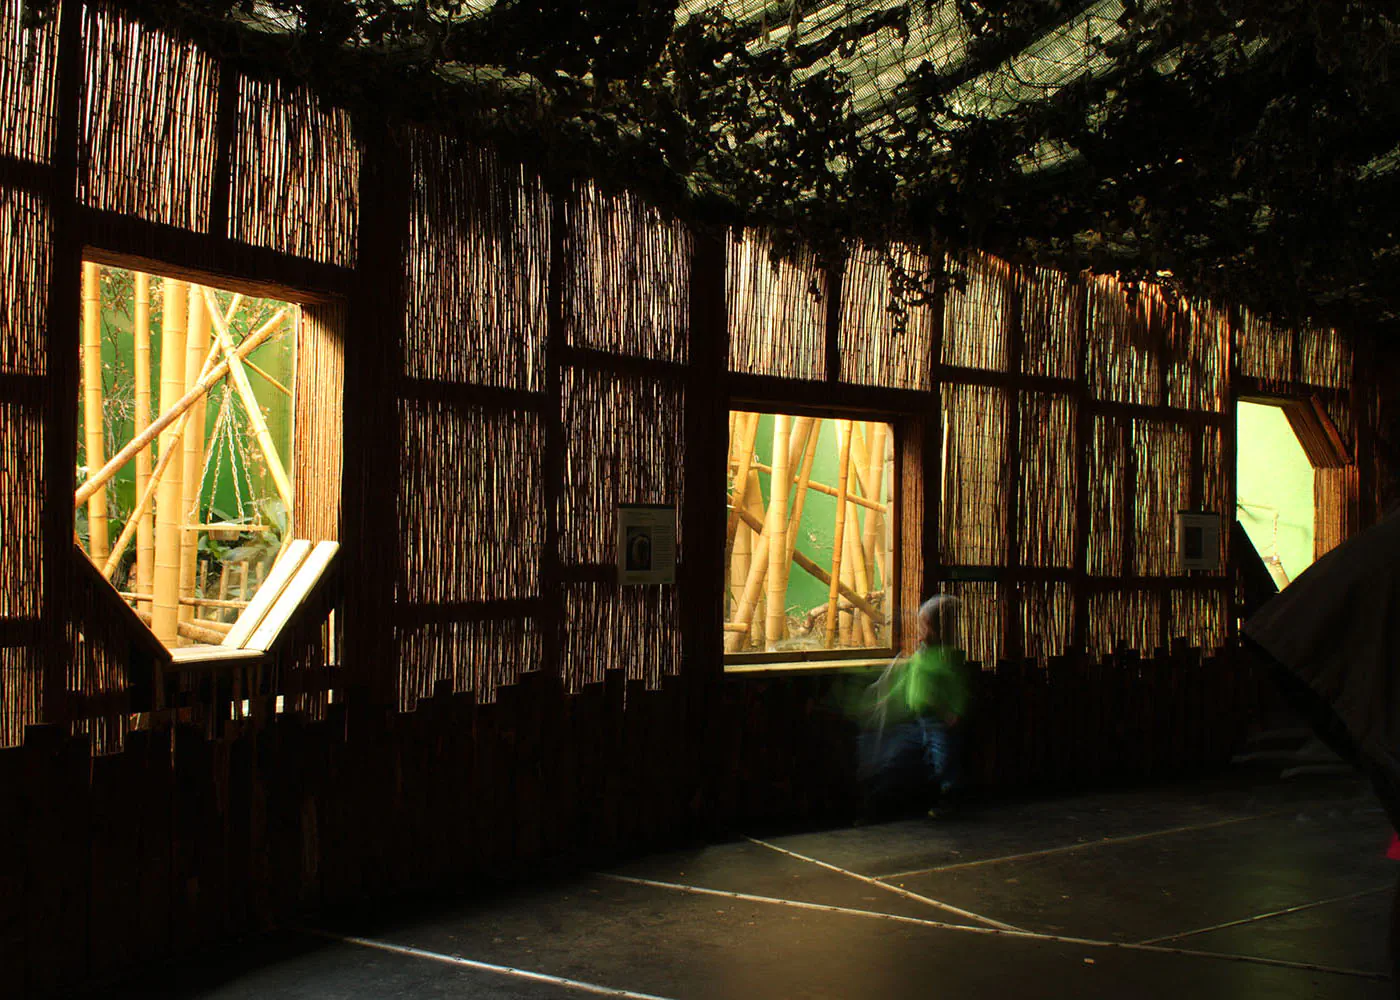 Corridor at Dublin Zoo with backlit bamboo walls and windows into capuchin monkey enclosure